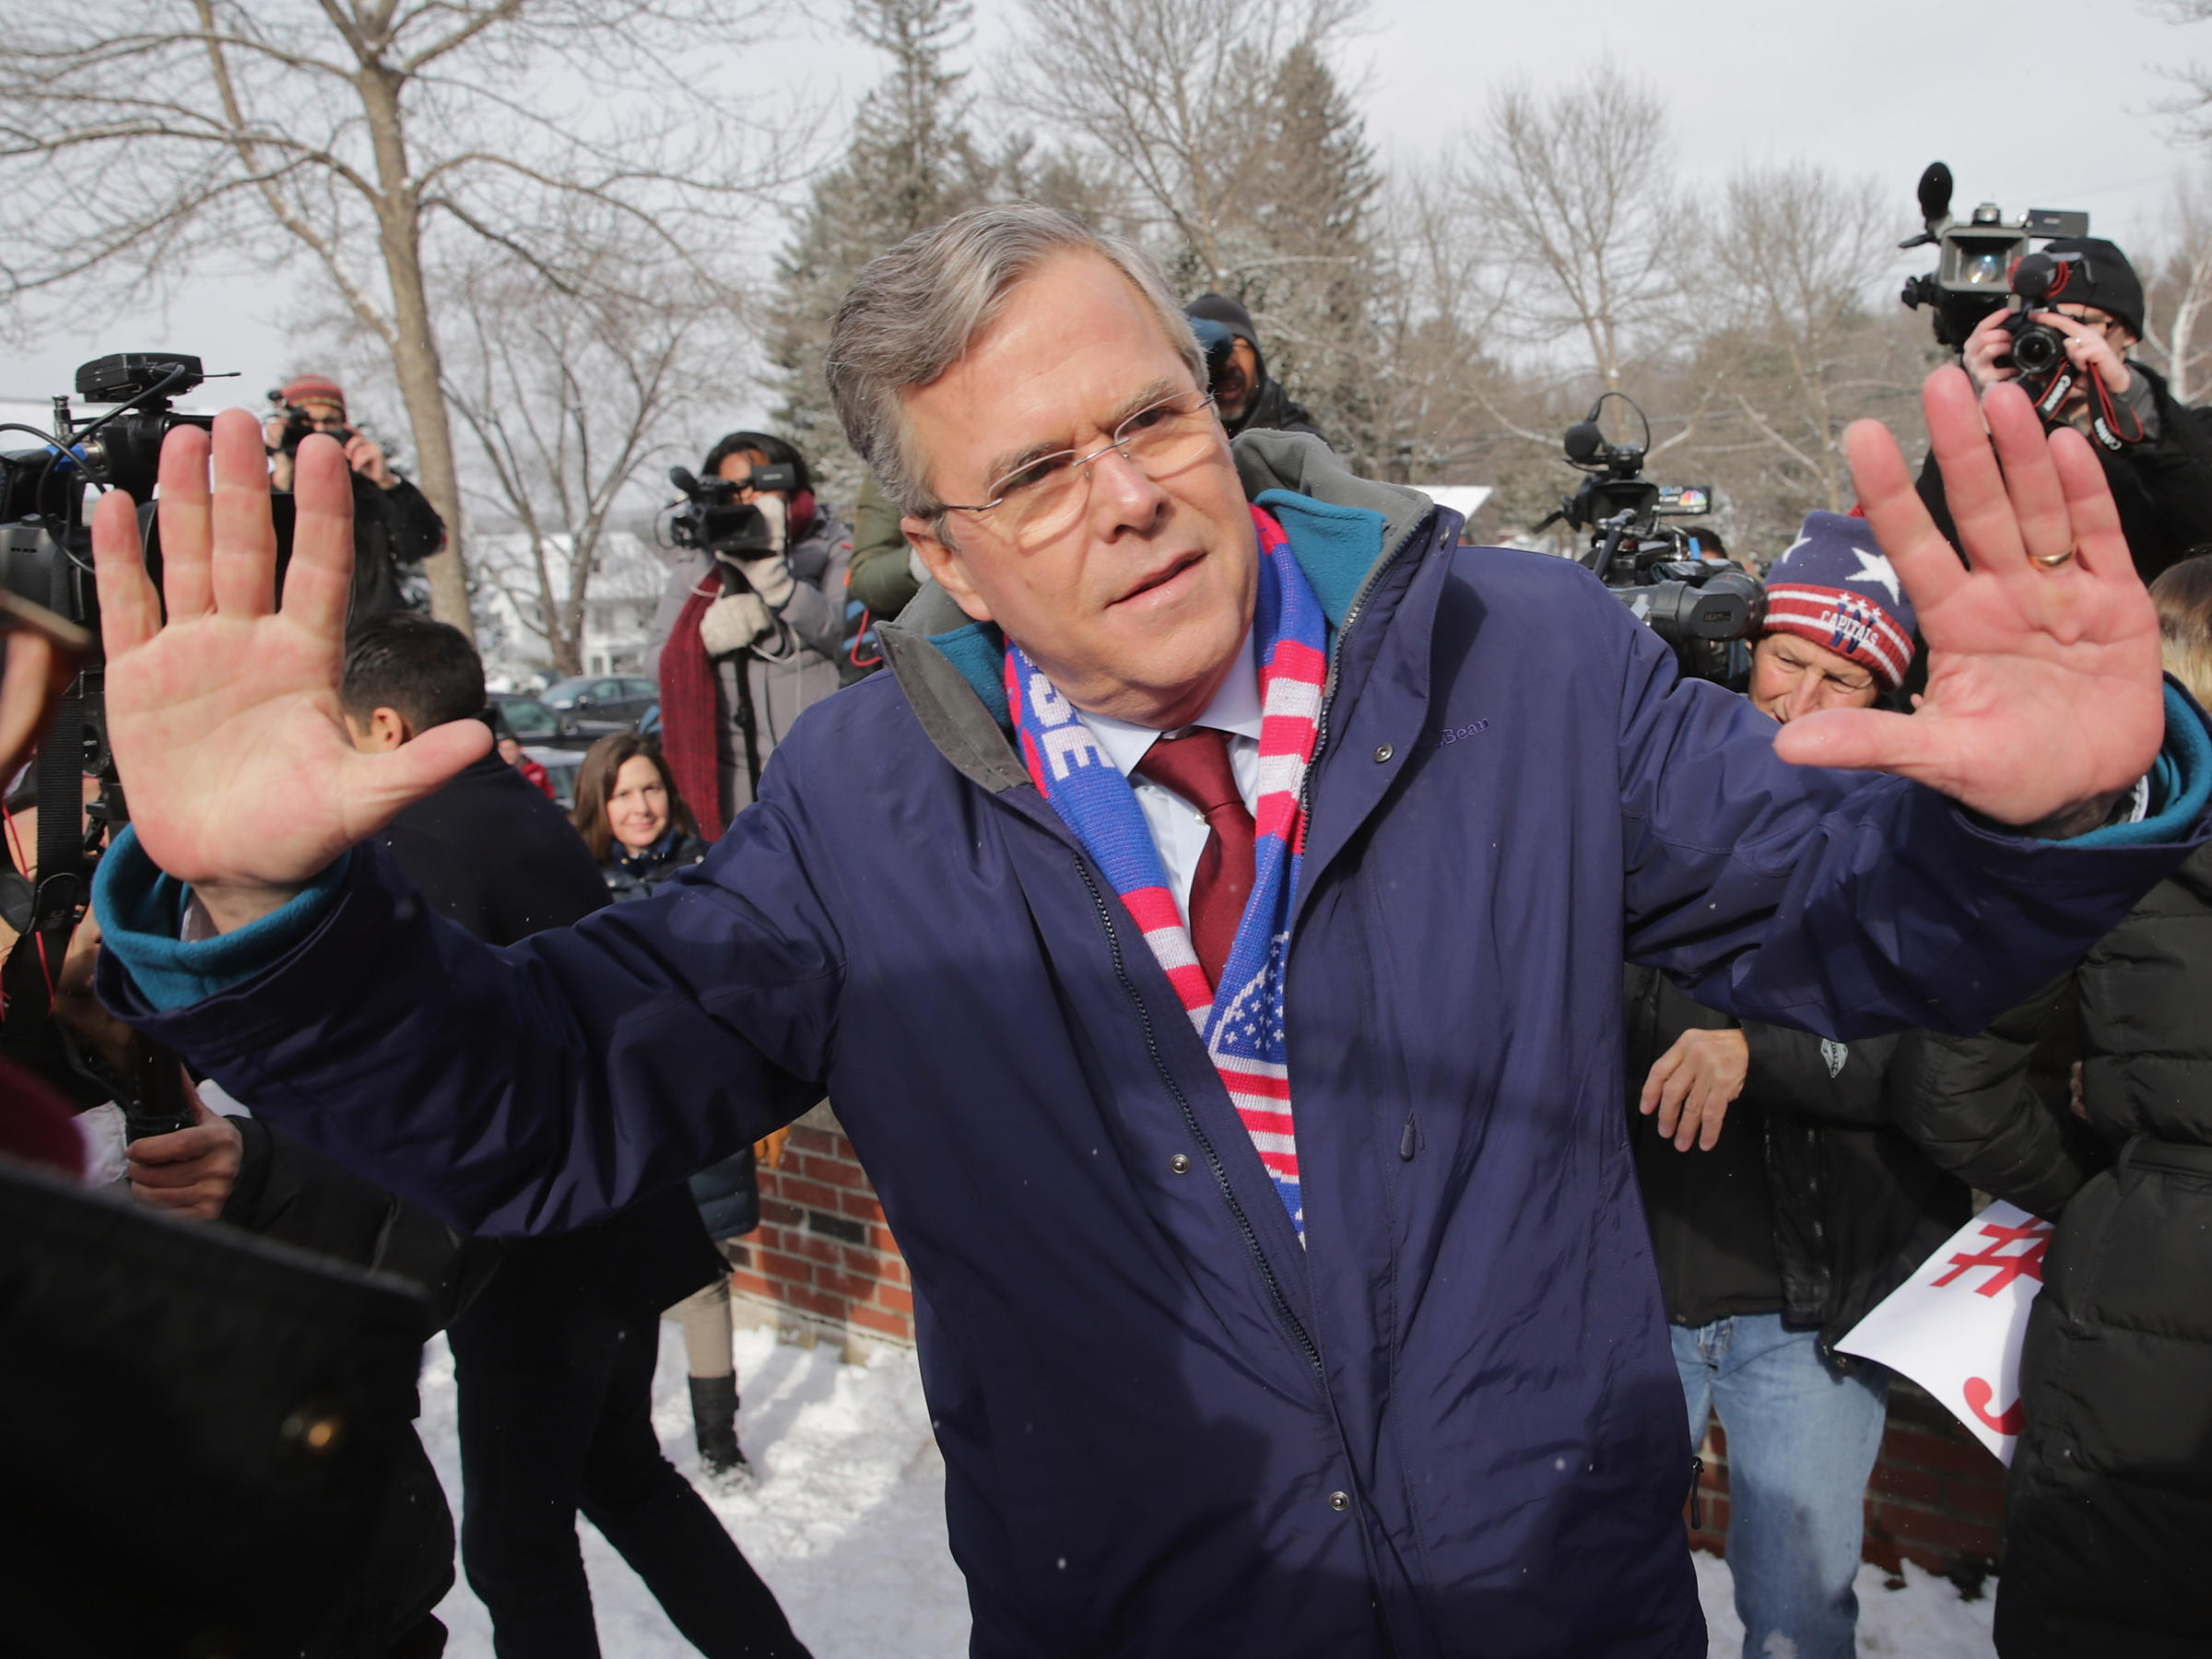 Jeb Bush destroying campaign finance rules: His tactics 